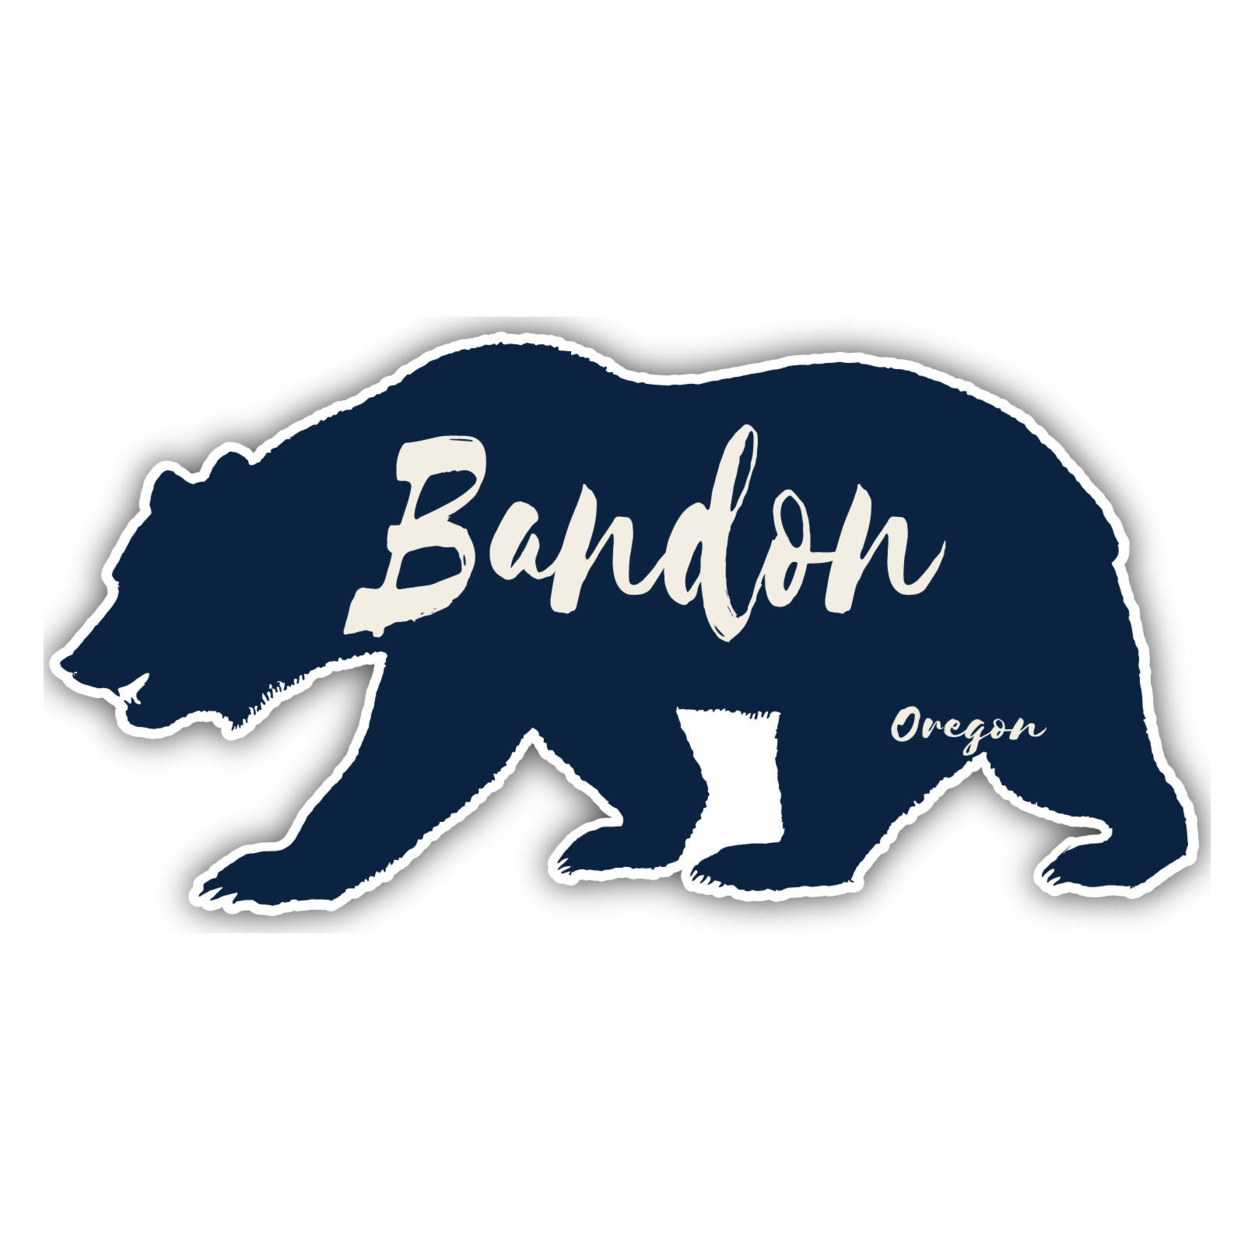 Bandon Oregon Souvenir Decorative Stickers (Choose Theme And Size) - 4-Pack, 6-Inch, Tent